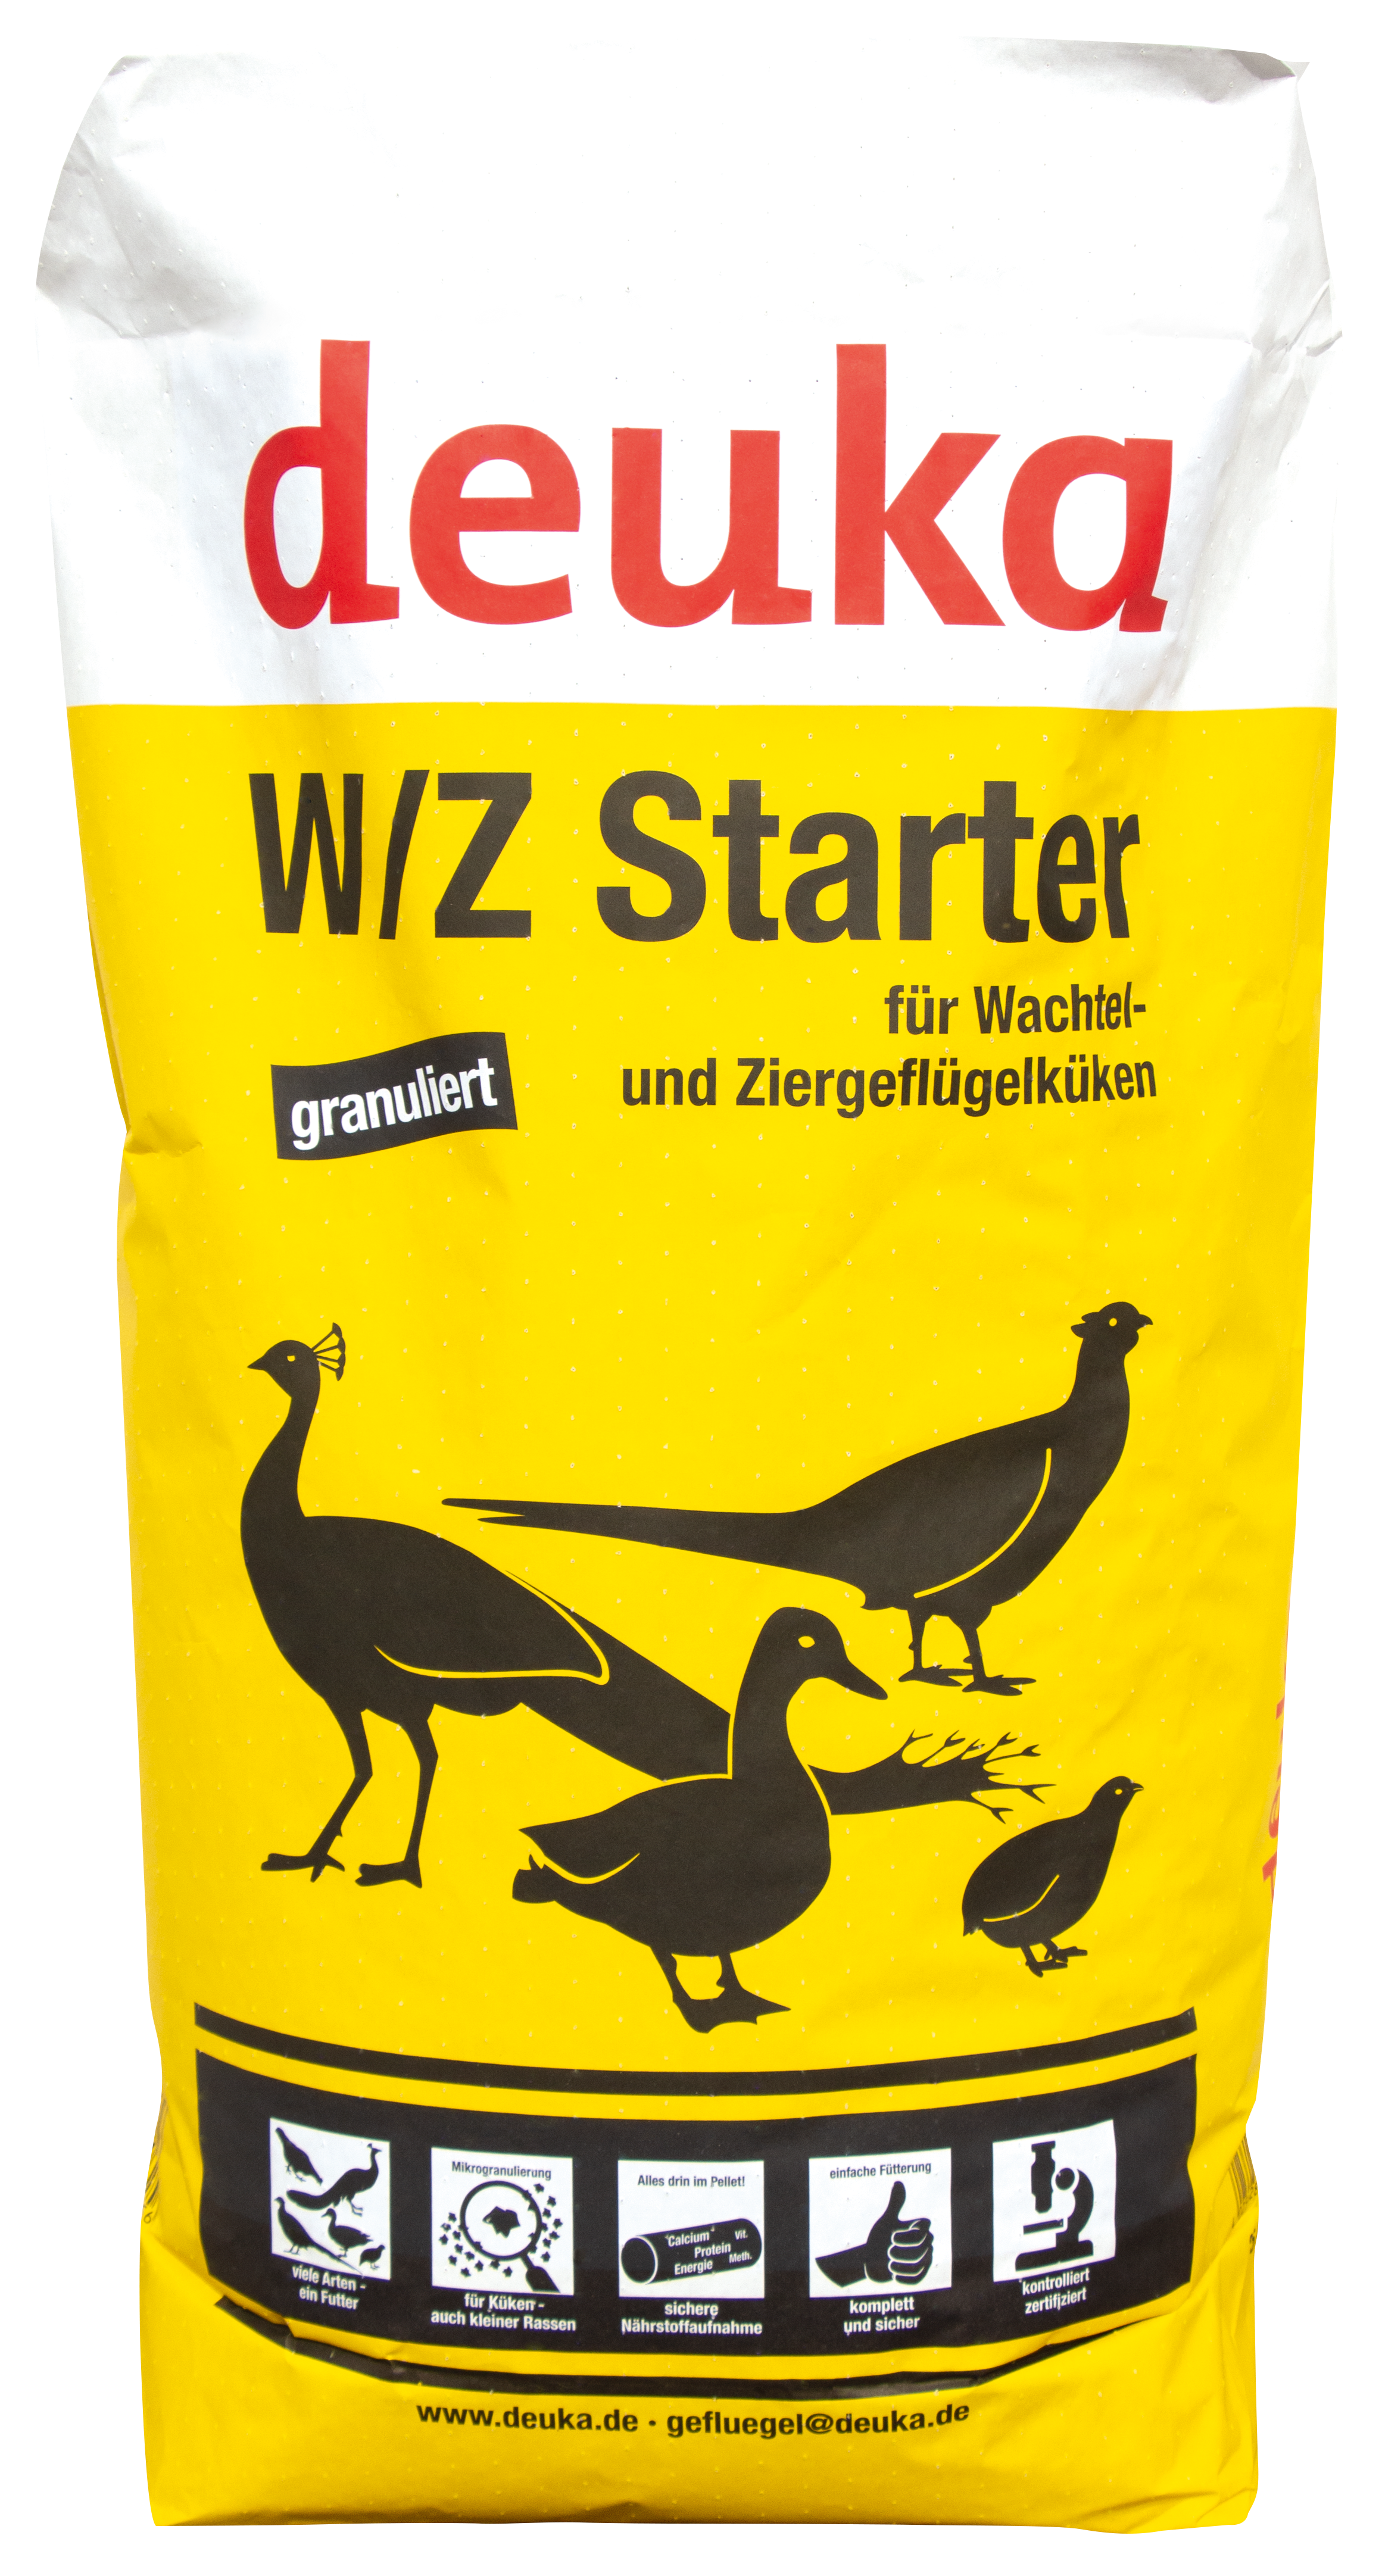 deuka W/Z Starter